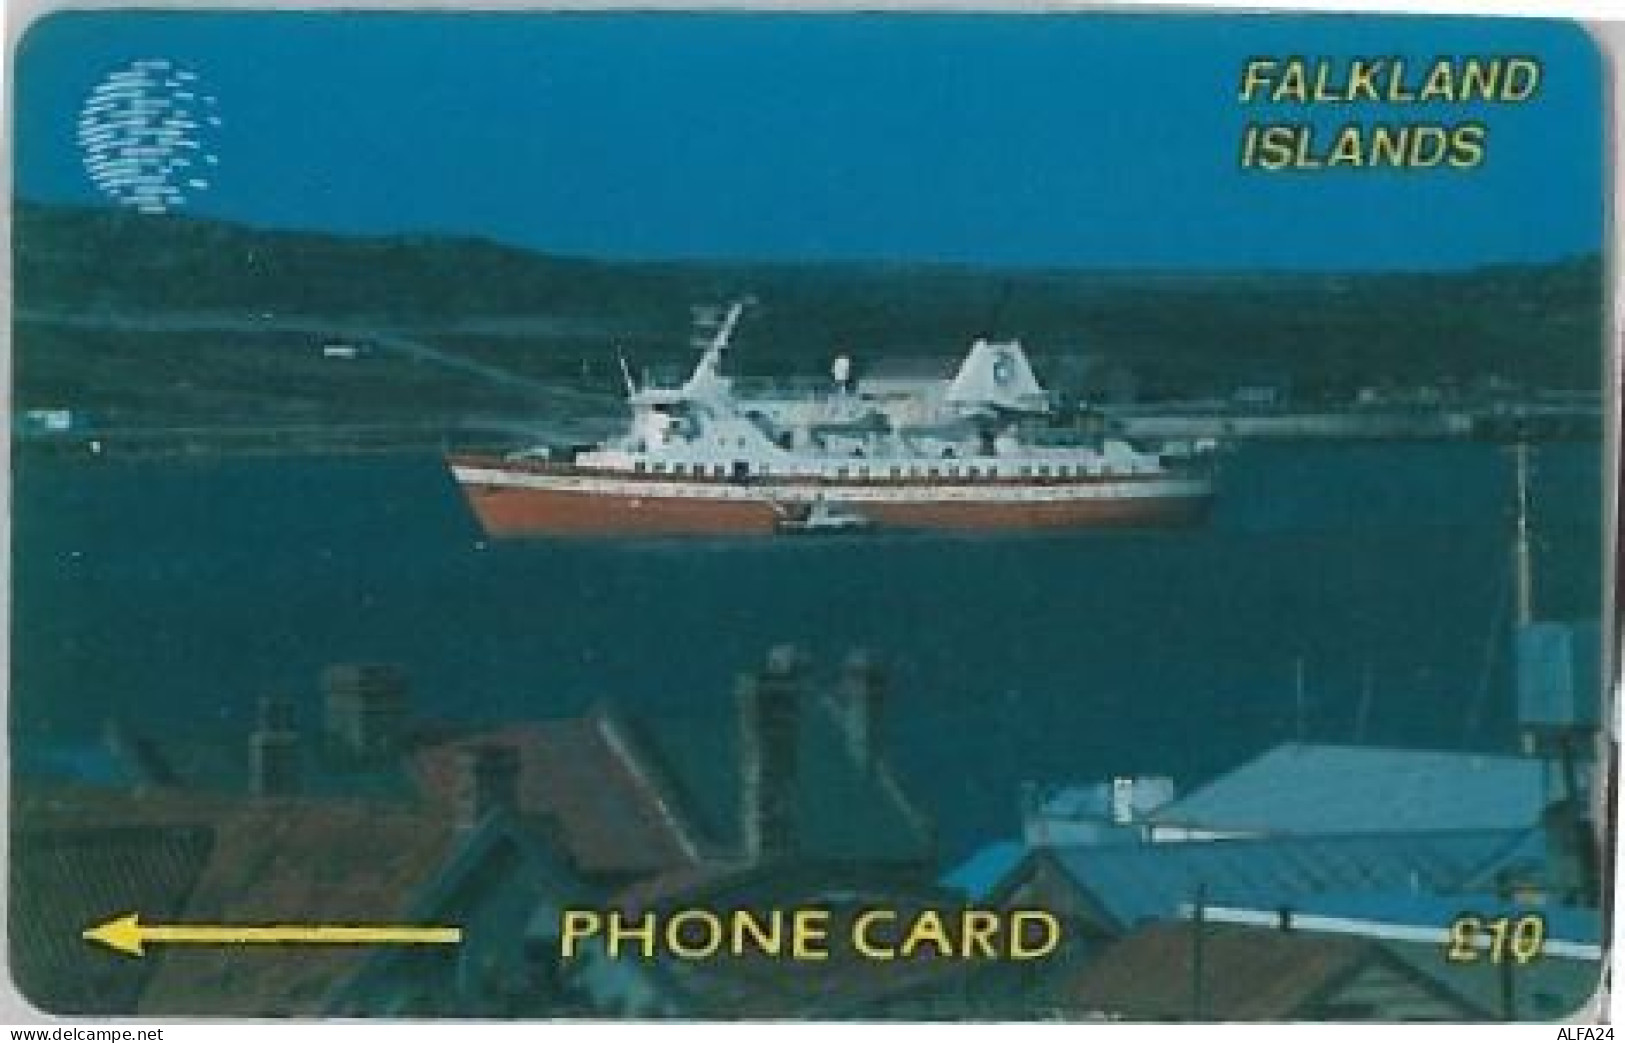 PHONE CARD - FALKLAND ISLANDS (H.4.8 - Falkland